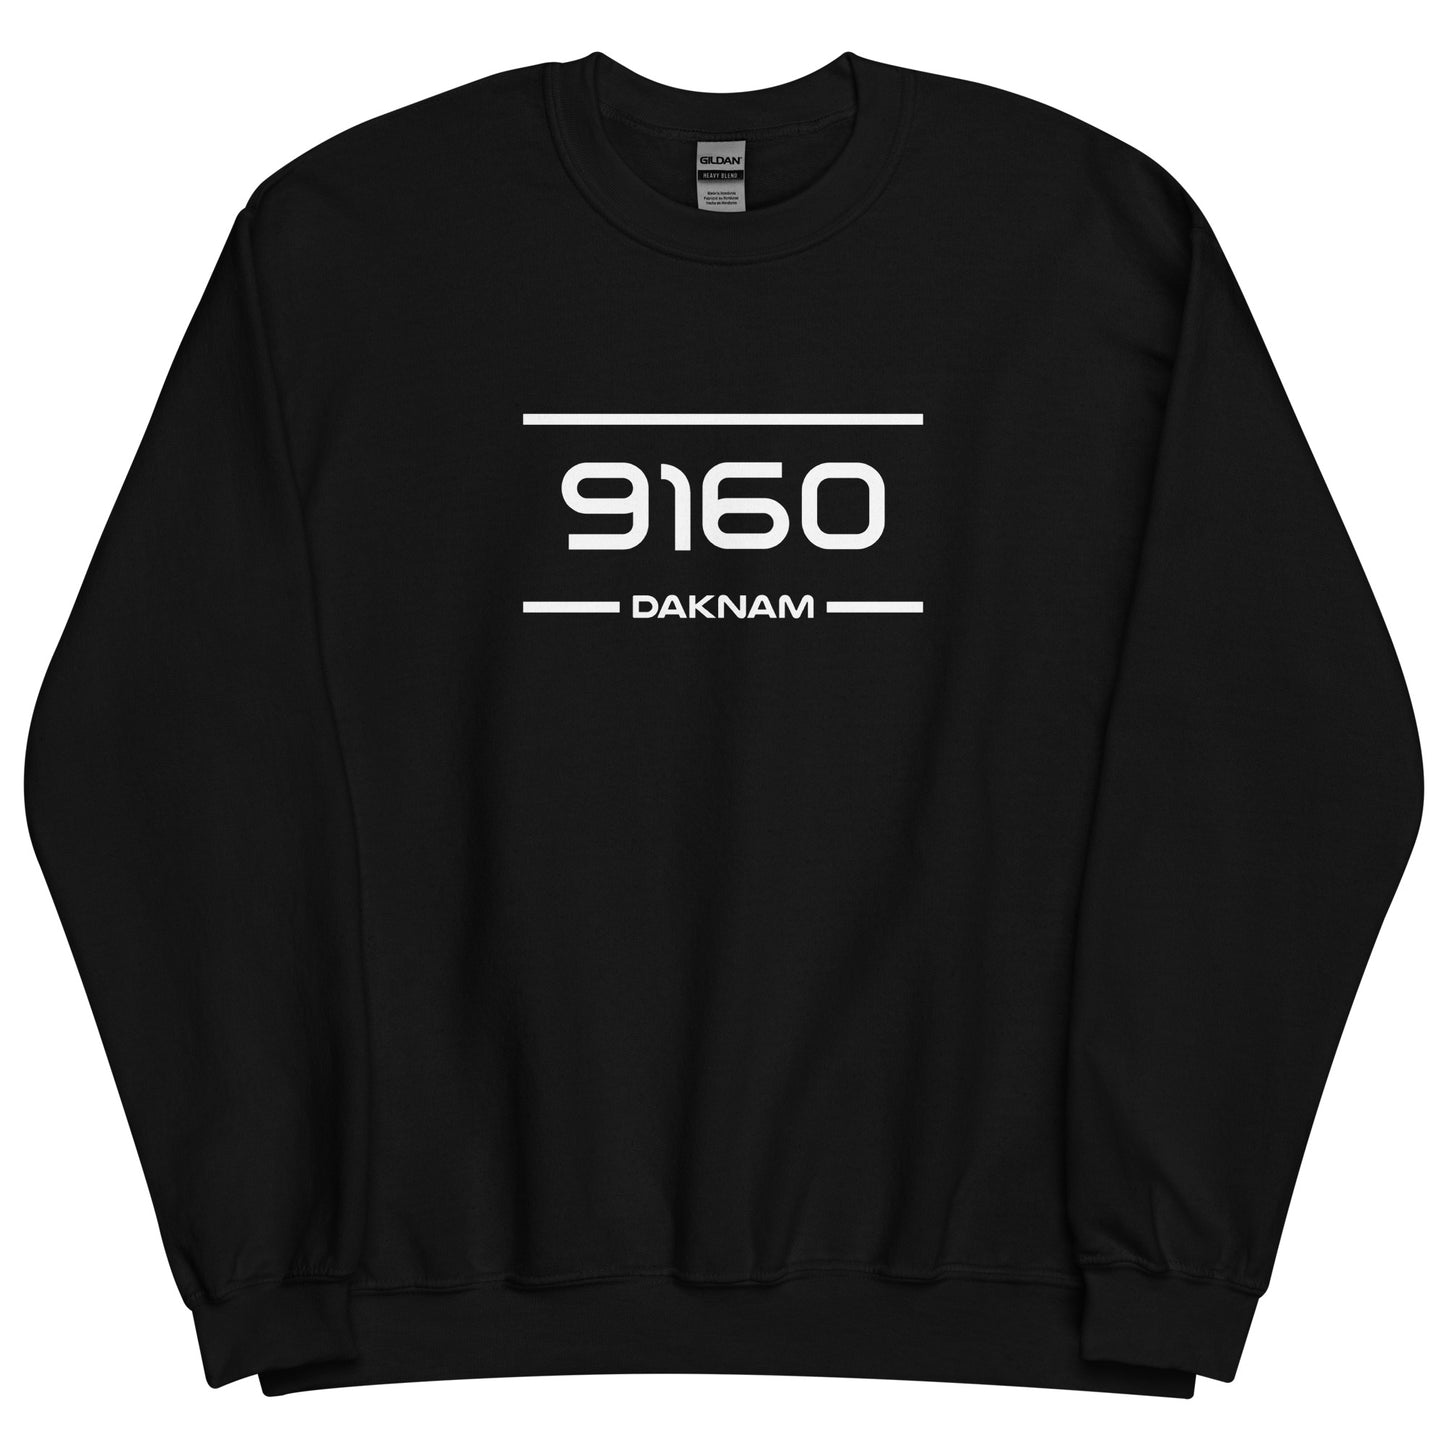 Sweater - 9160 - Daknam (M/V)